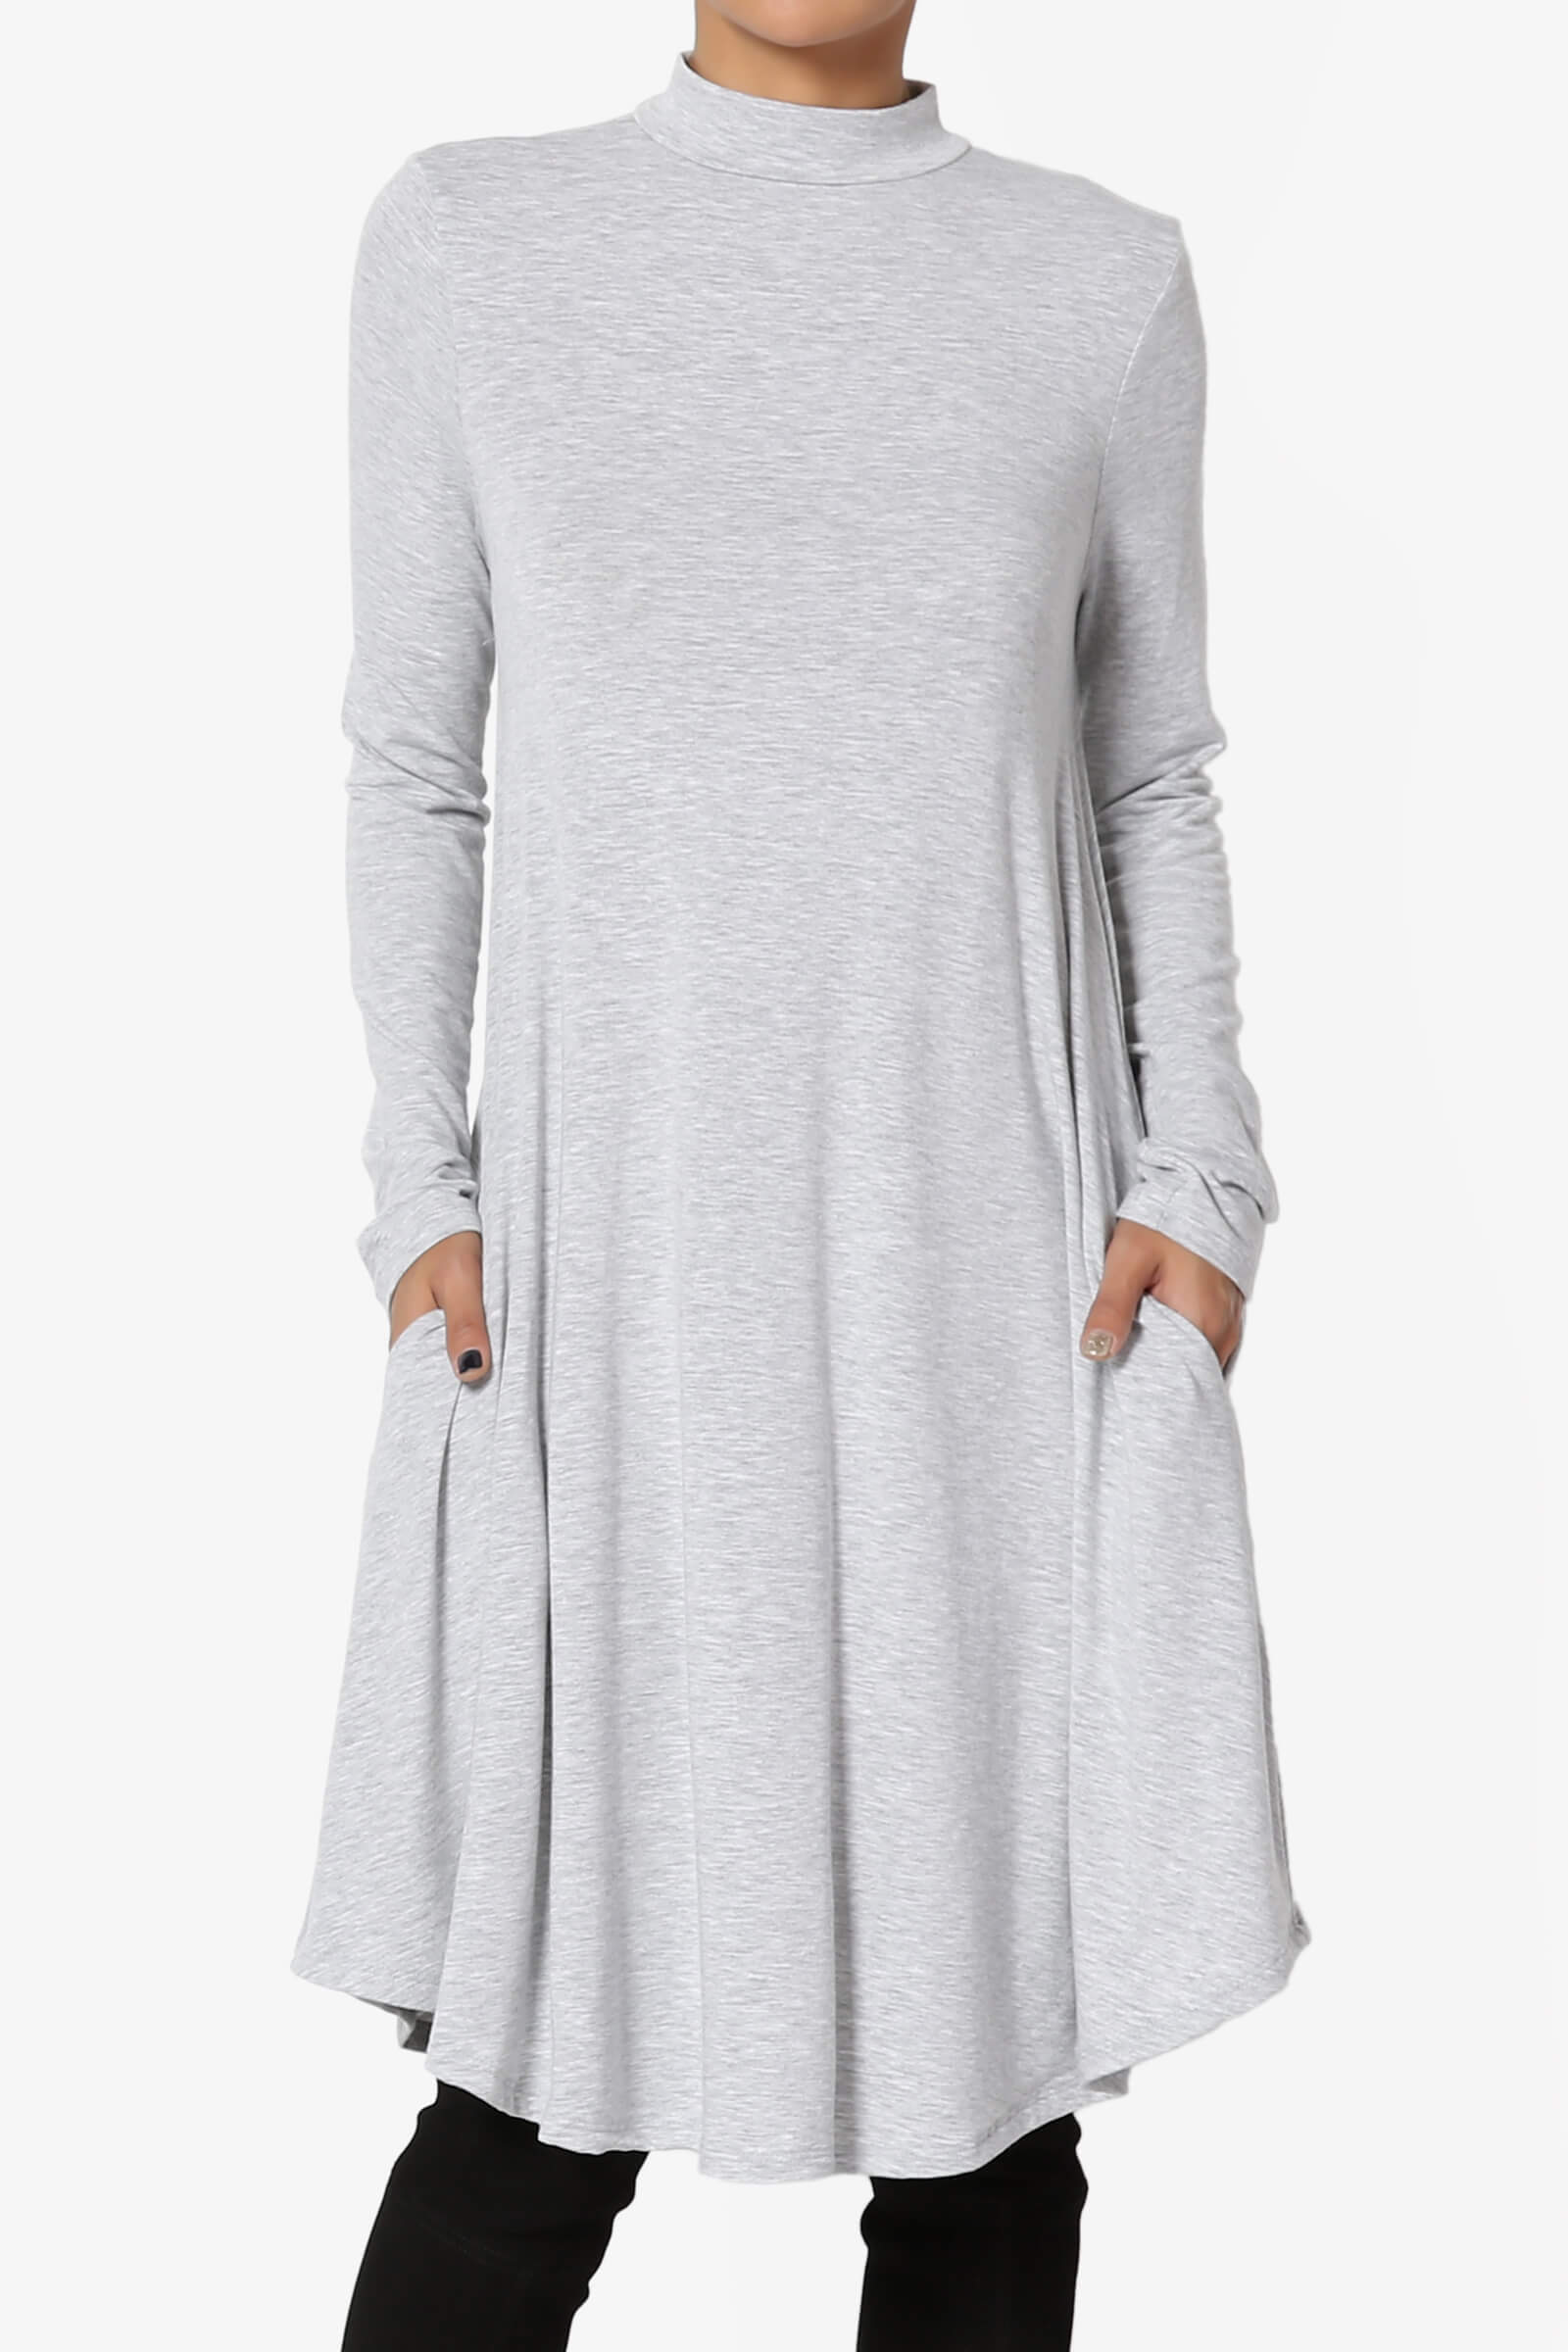 A woman wearing a gray turtleneck dress